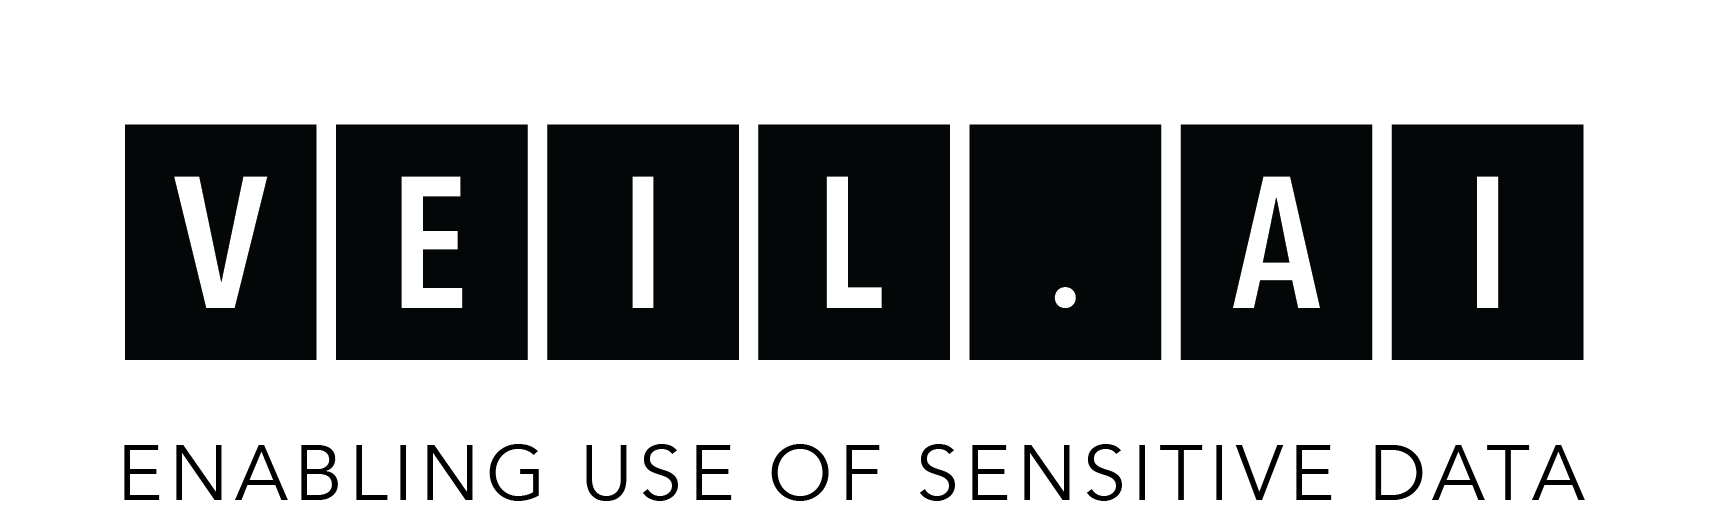 VEIL.AI's logo